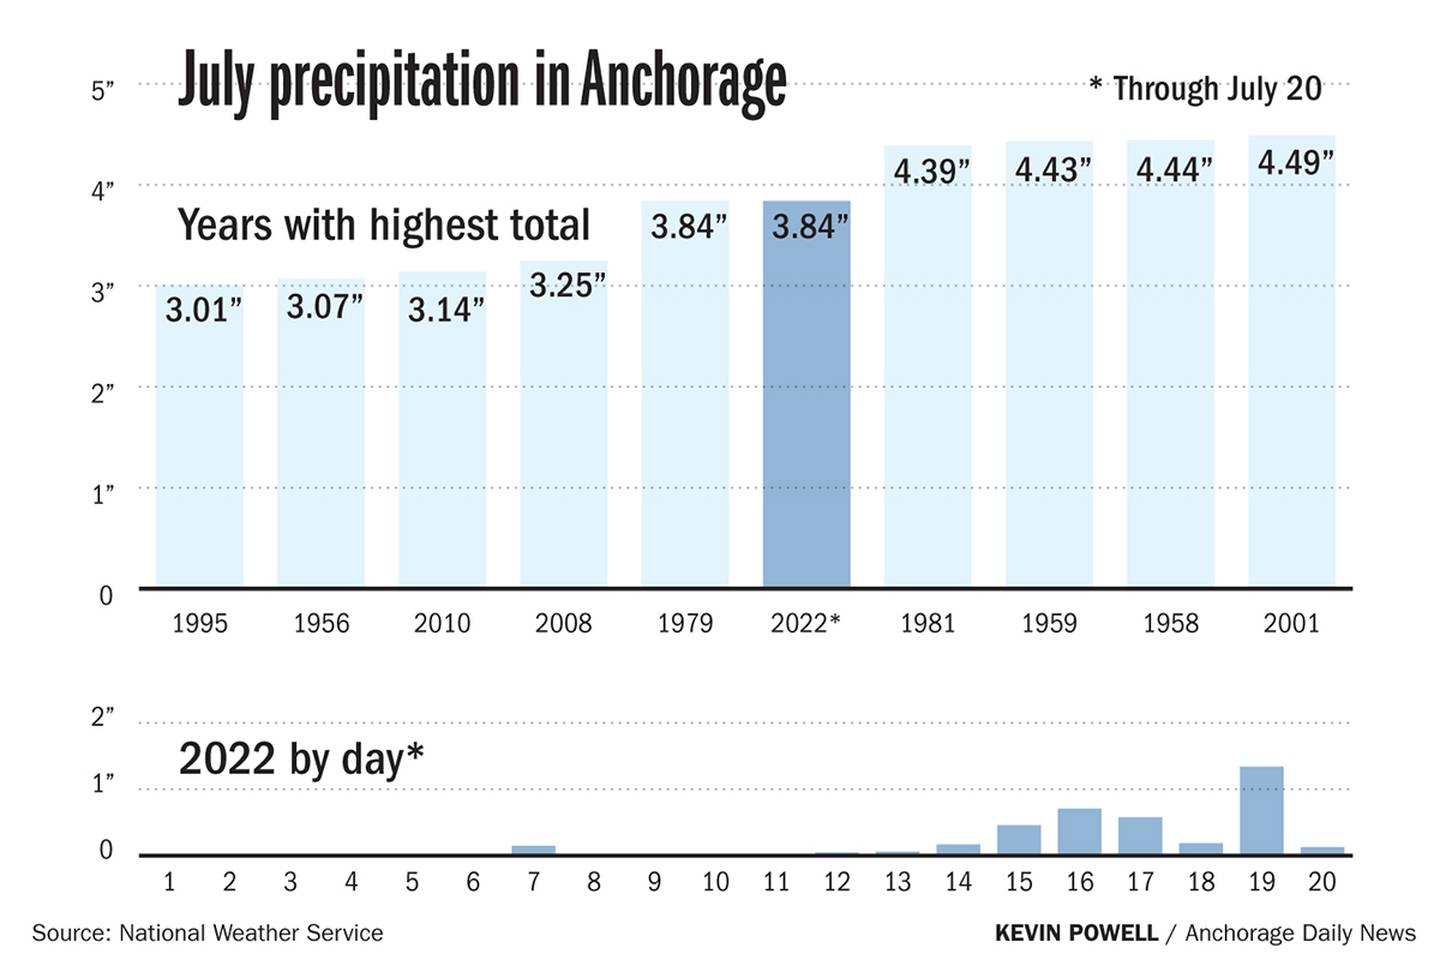 July precipitation in Anchorage